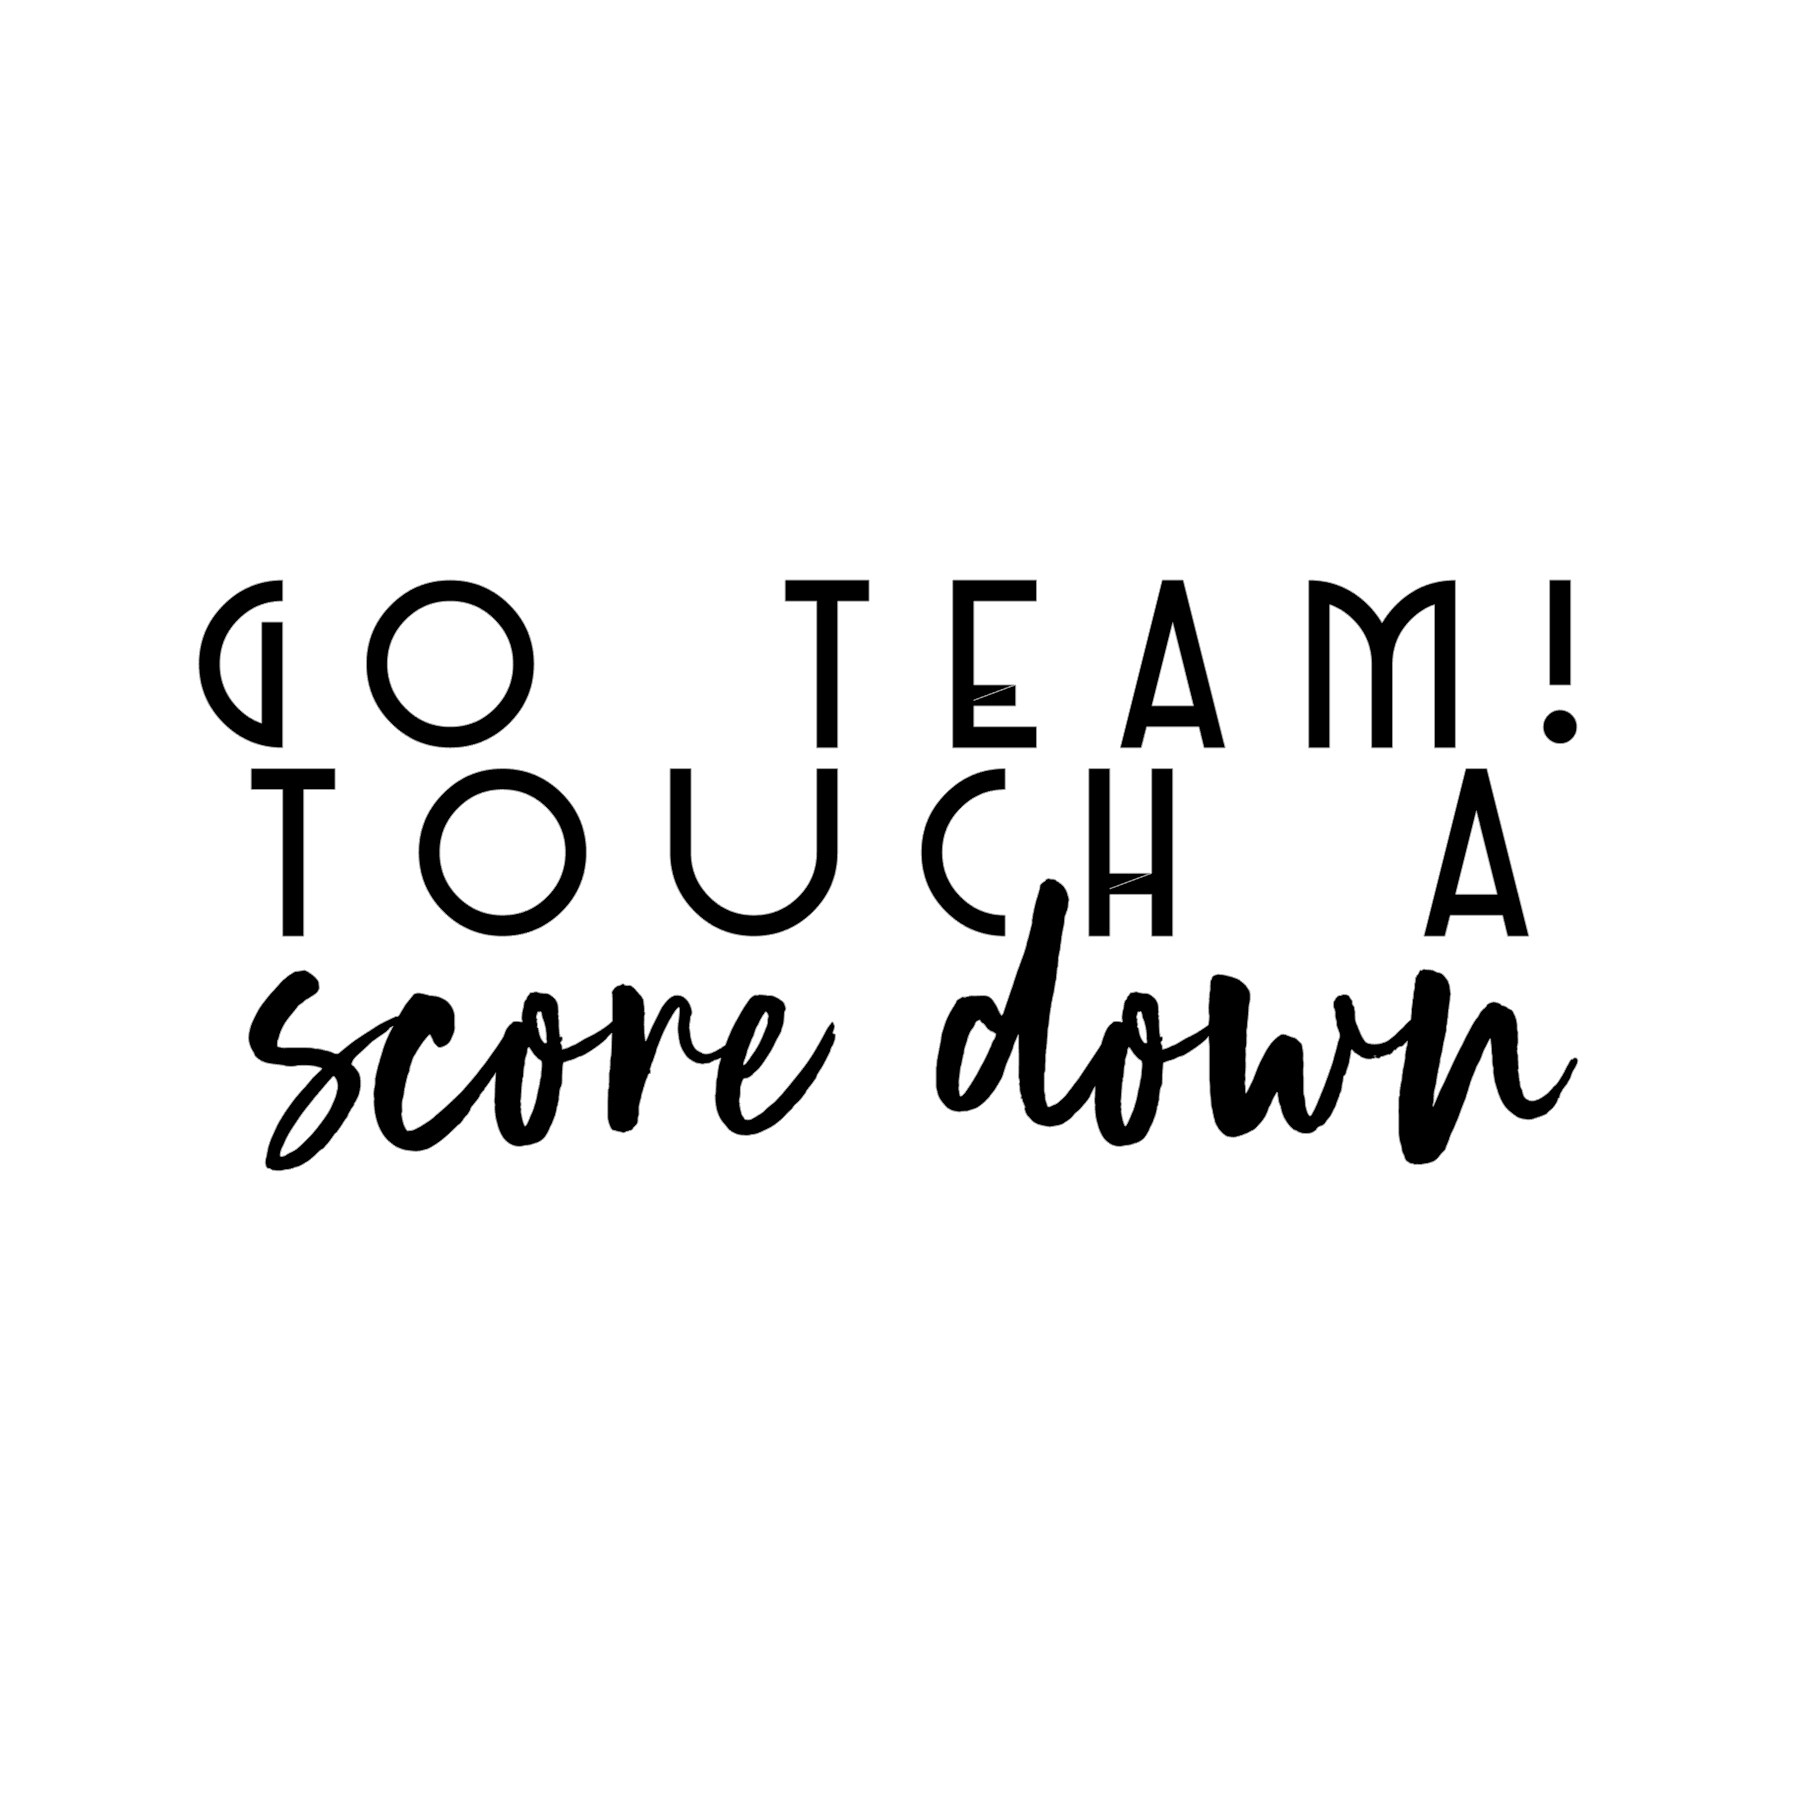 Go Team Touch a Scoredown